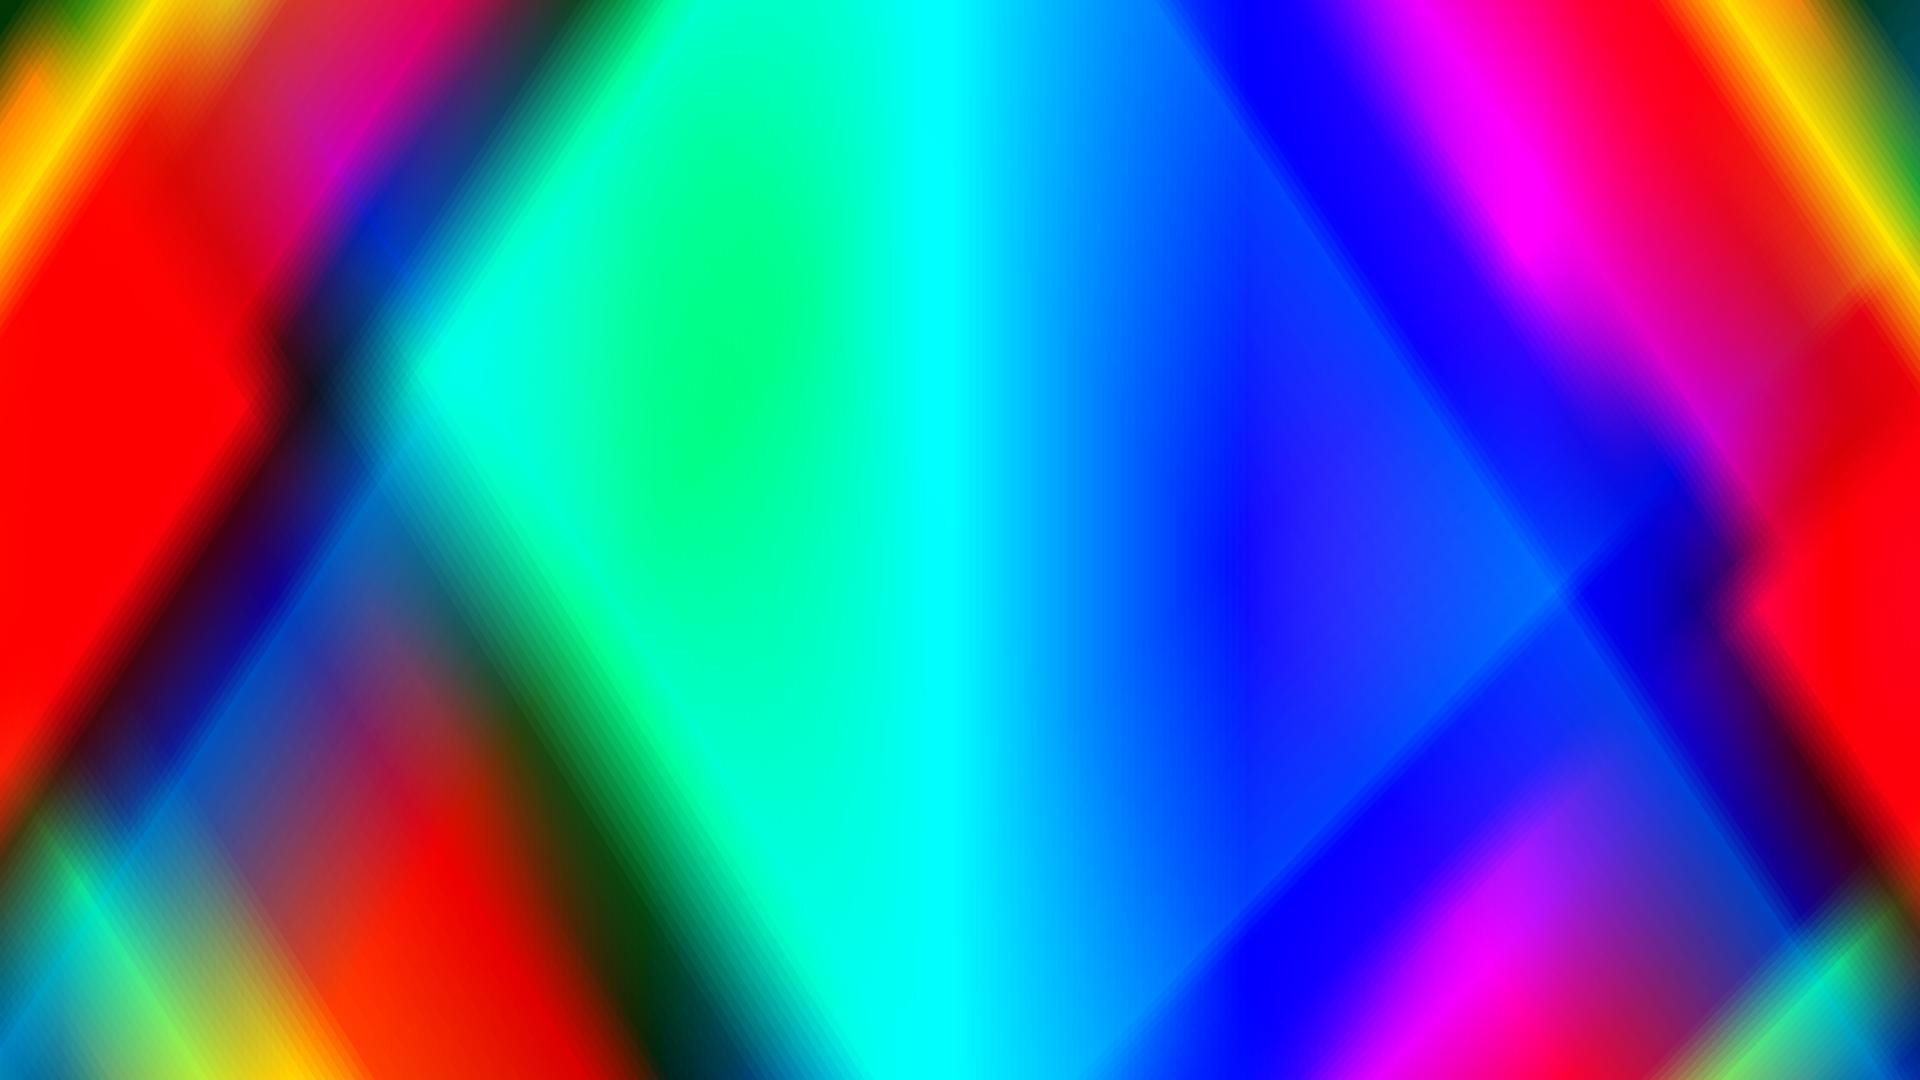 1920x1080 Neon Background by Yvesia on DeviantArt